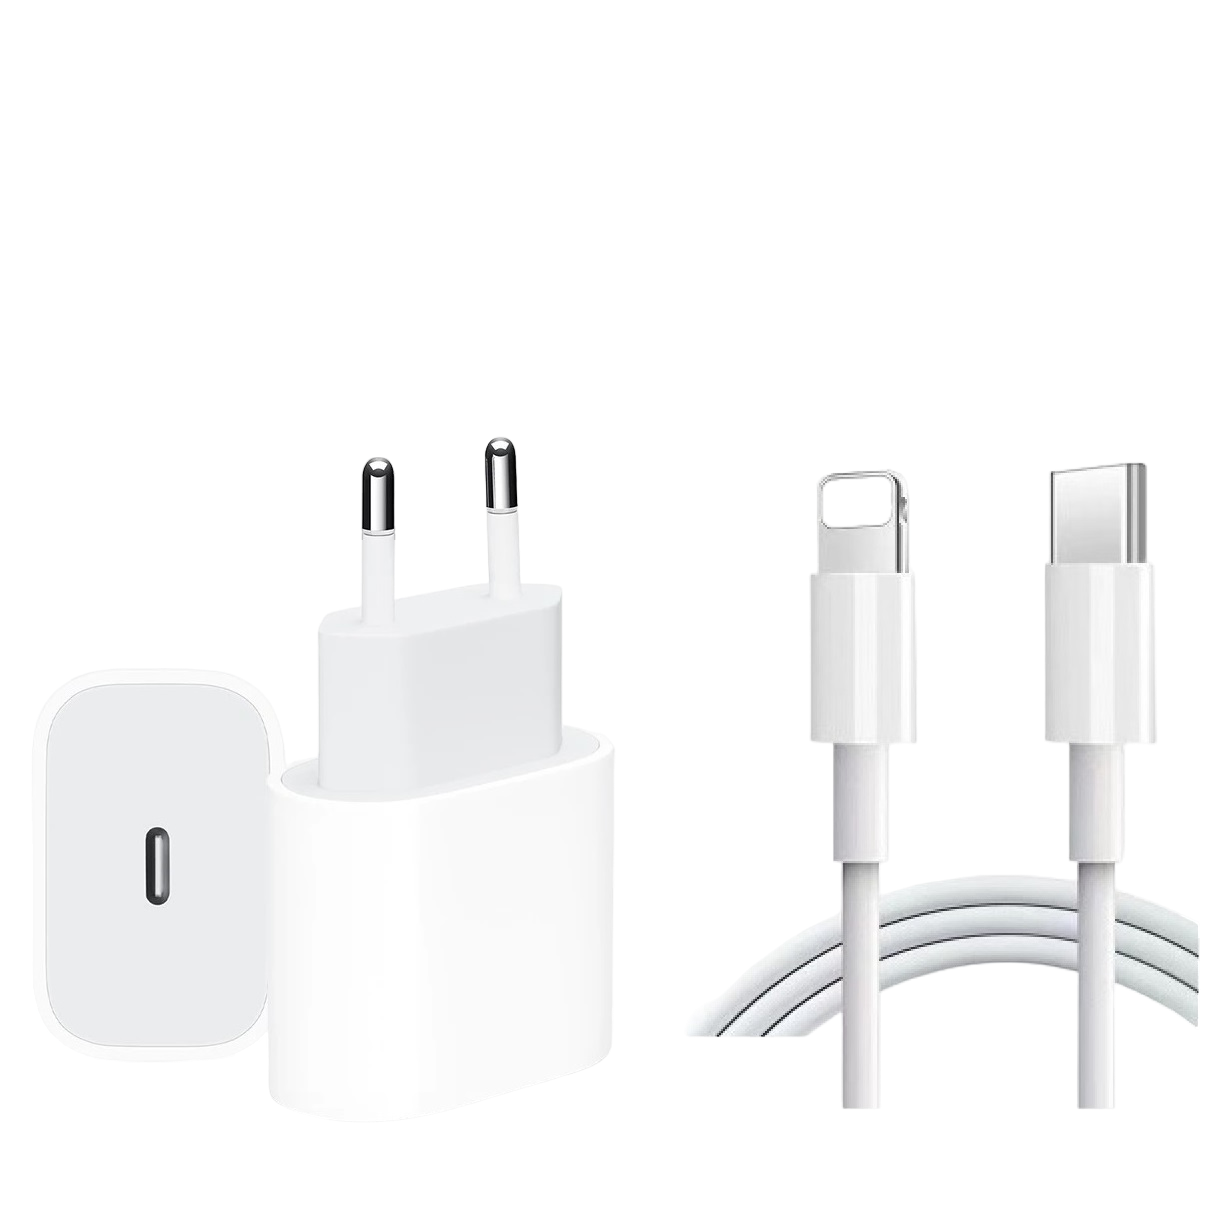 Meter Ladekabel iPhone 12, 13, USB VENTARENT Apple, 11, Netzteil Lightning XS 14, 20W Ladegerät Ladekabel Apple mit C für iPhone 2 XR, Weiß Ladegerät